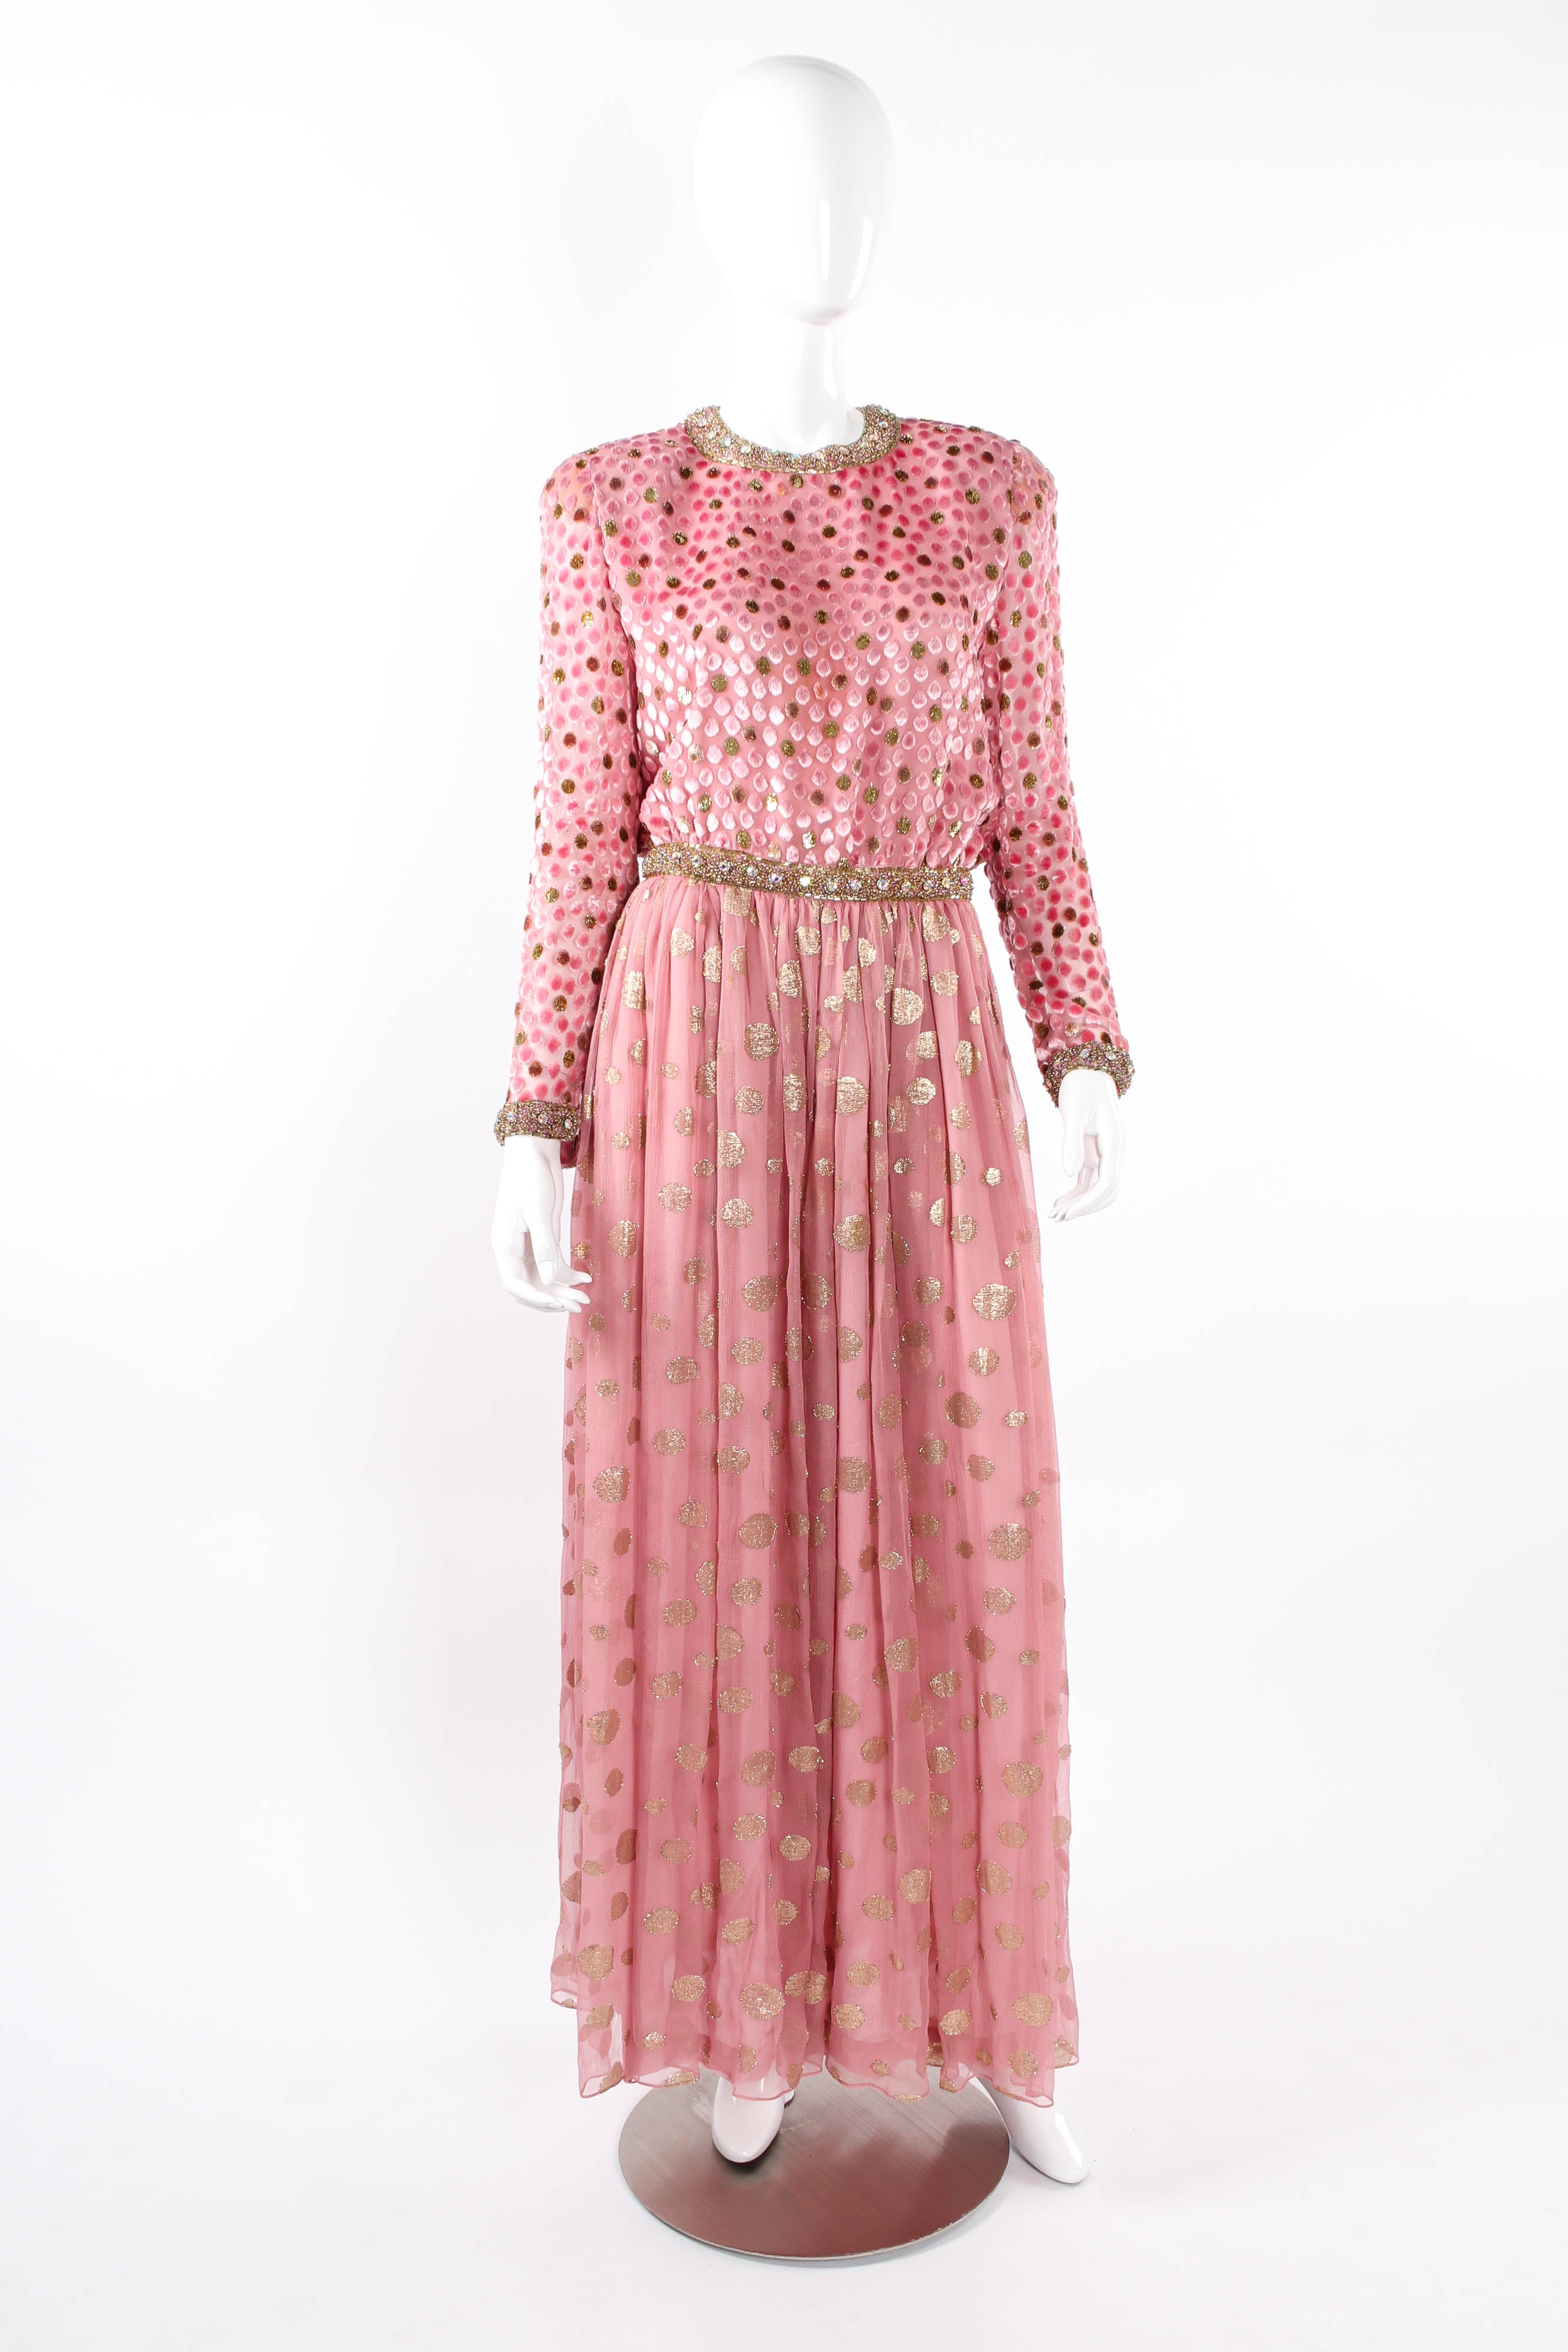 Vintage Adele Simpson Beaded Textured Dot Dress on mannequin @ Recess LA 